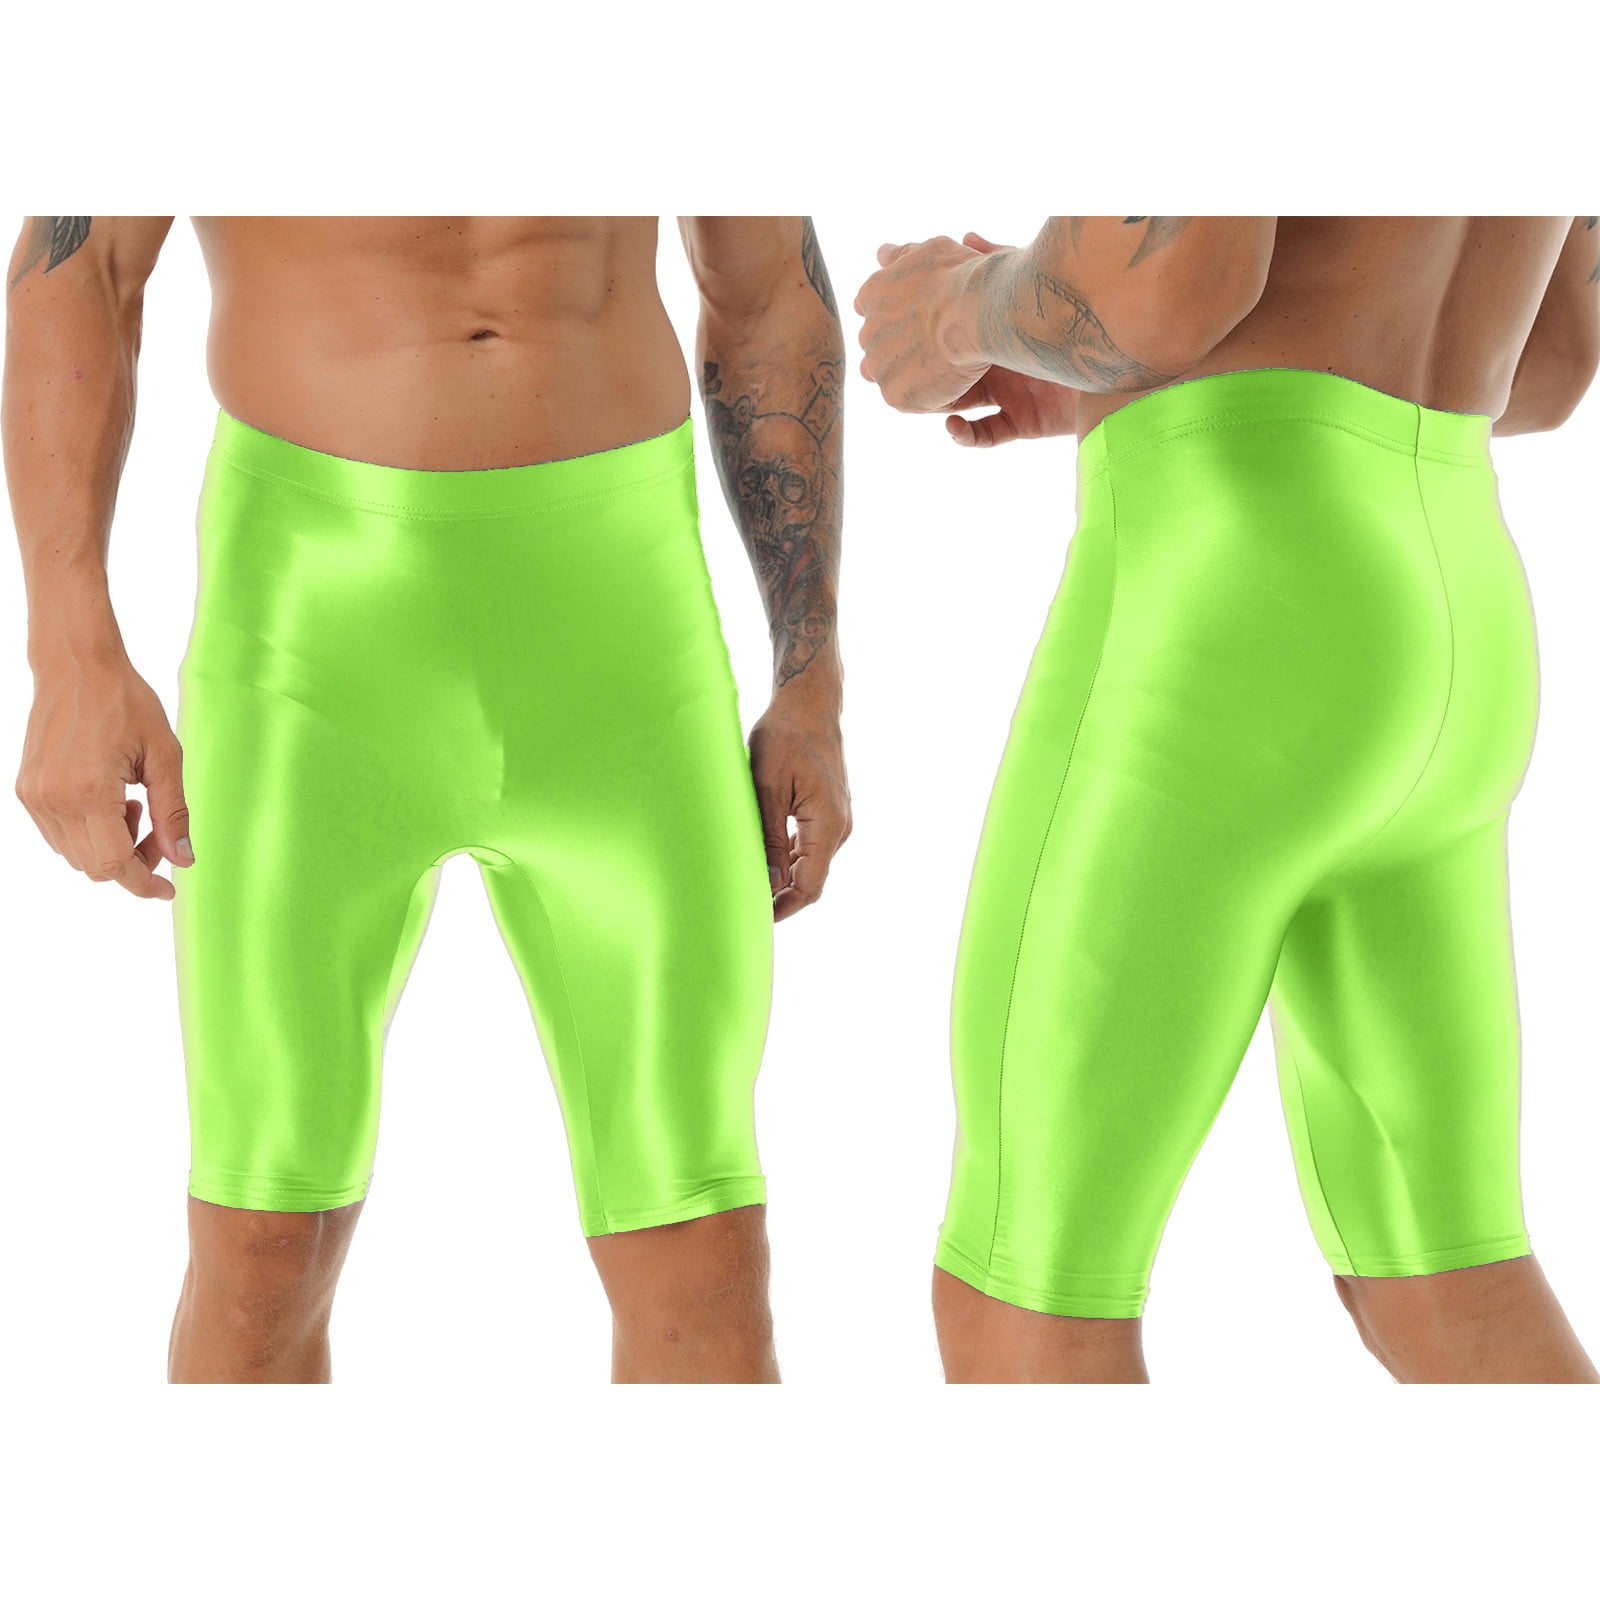 Men's Skinfit Green Spandex Tights Compression Pants Small 32